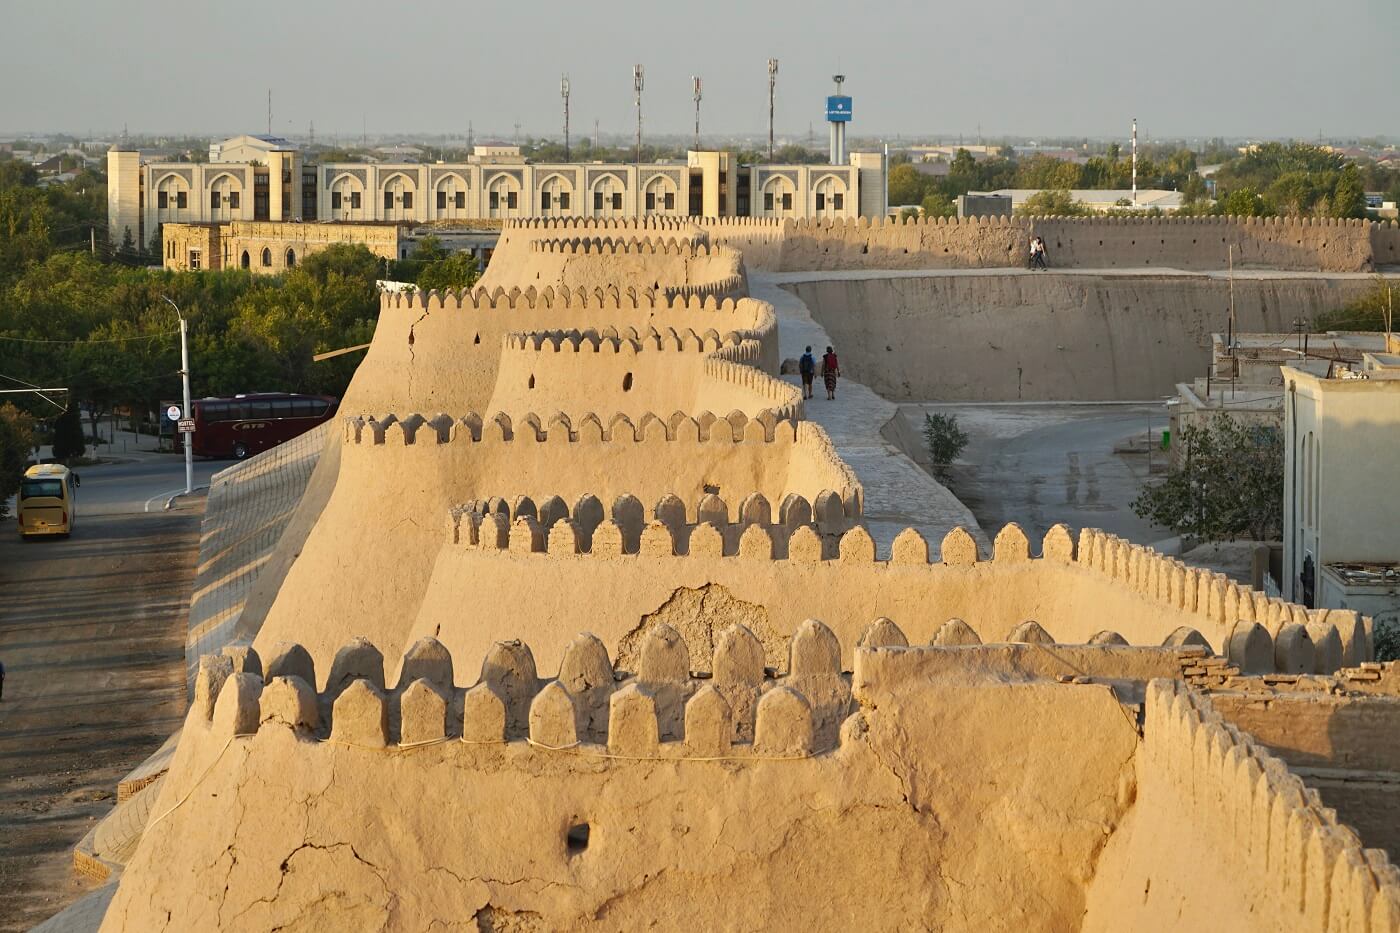 Khiva city walls in Uzbekistan